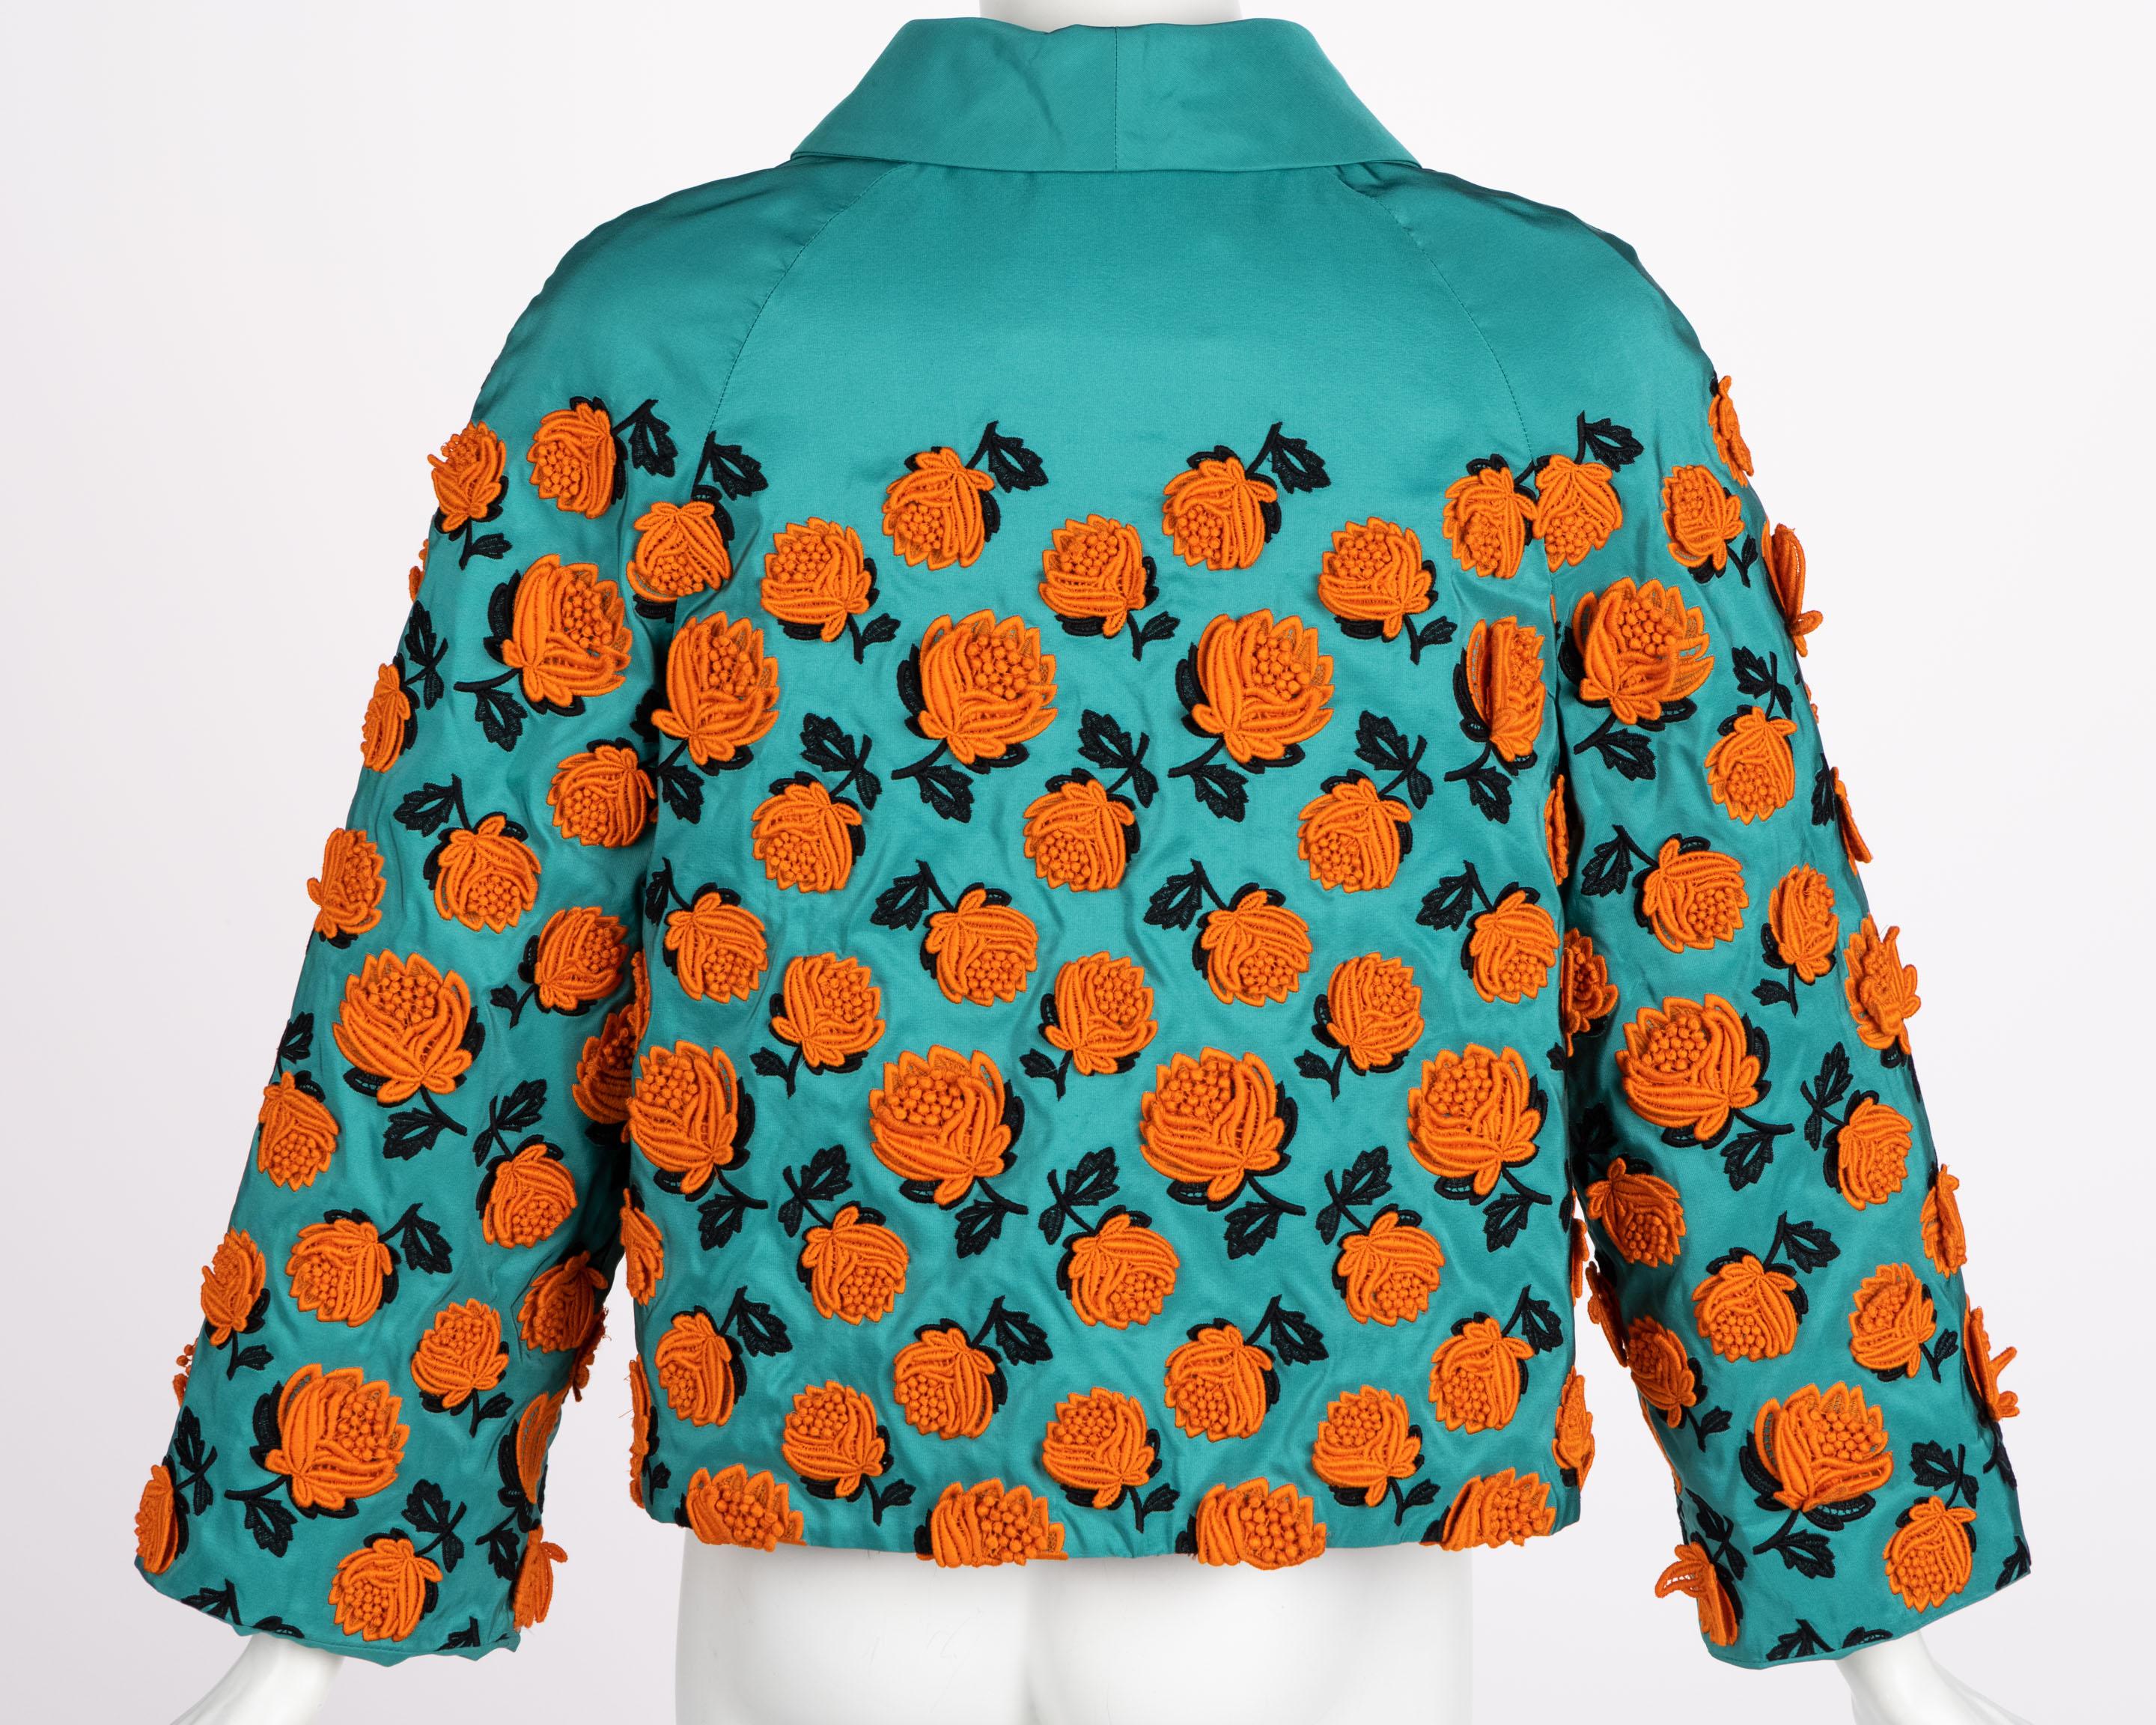 Prada Turquoise Silk Taffeta Floral Applique Jacket, Spring 2012 In Excellent Condition For Sale In Boca Raton, FL